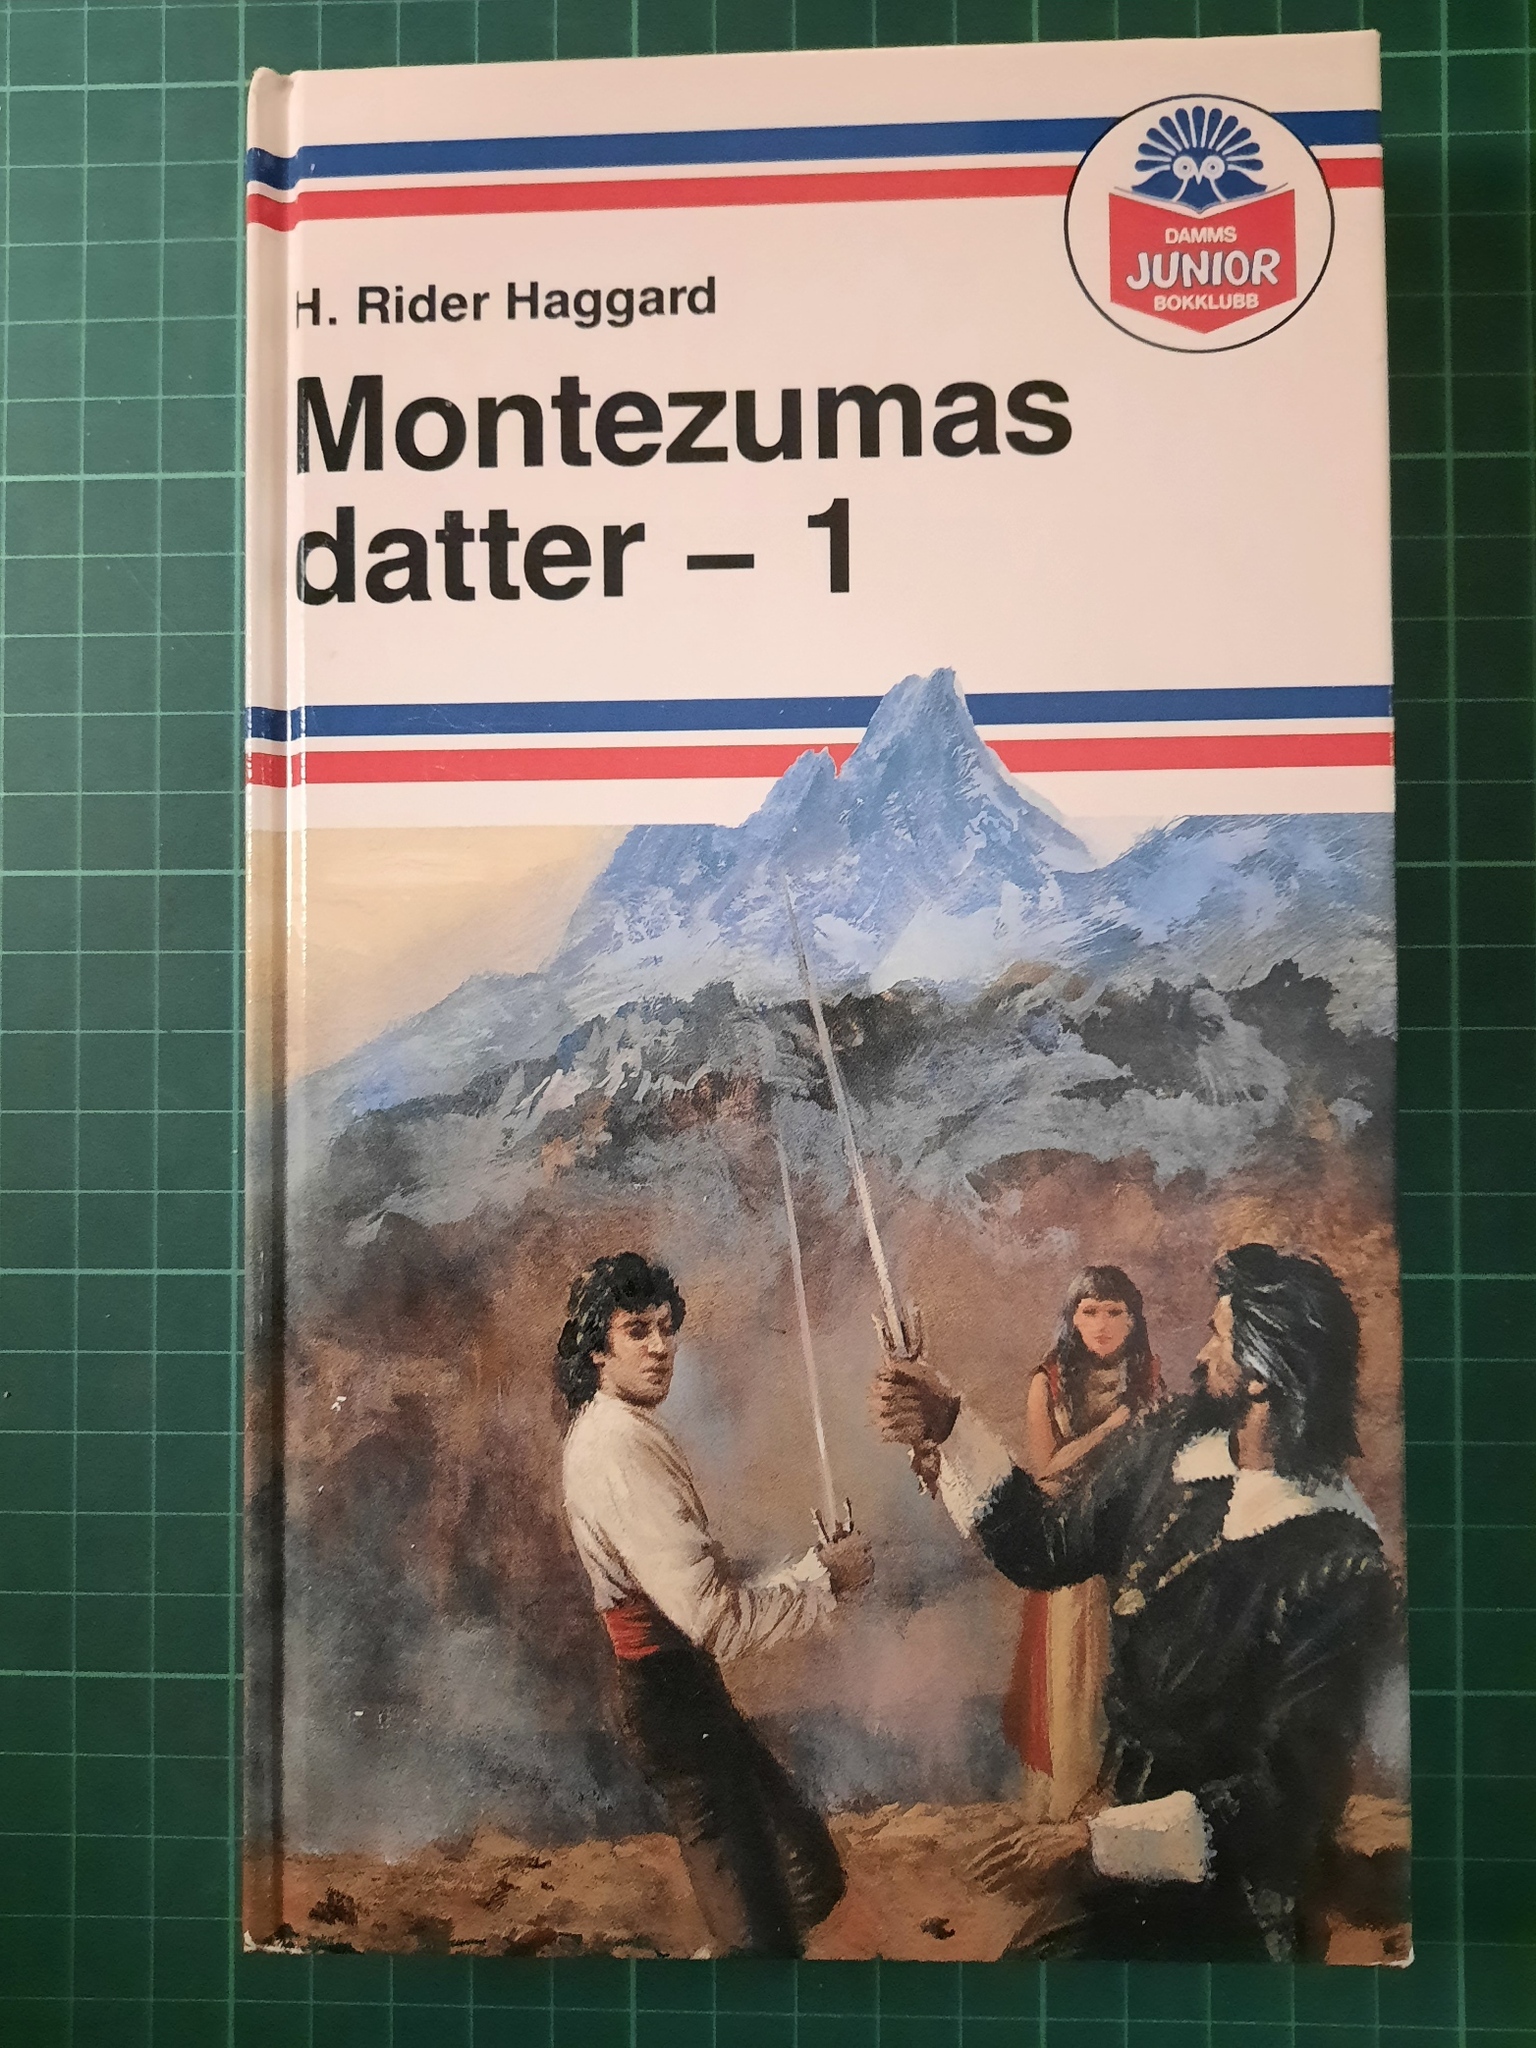 Montwzumas datter - 1